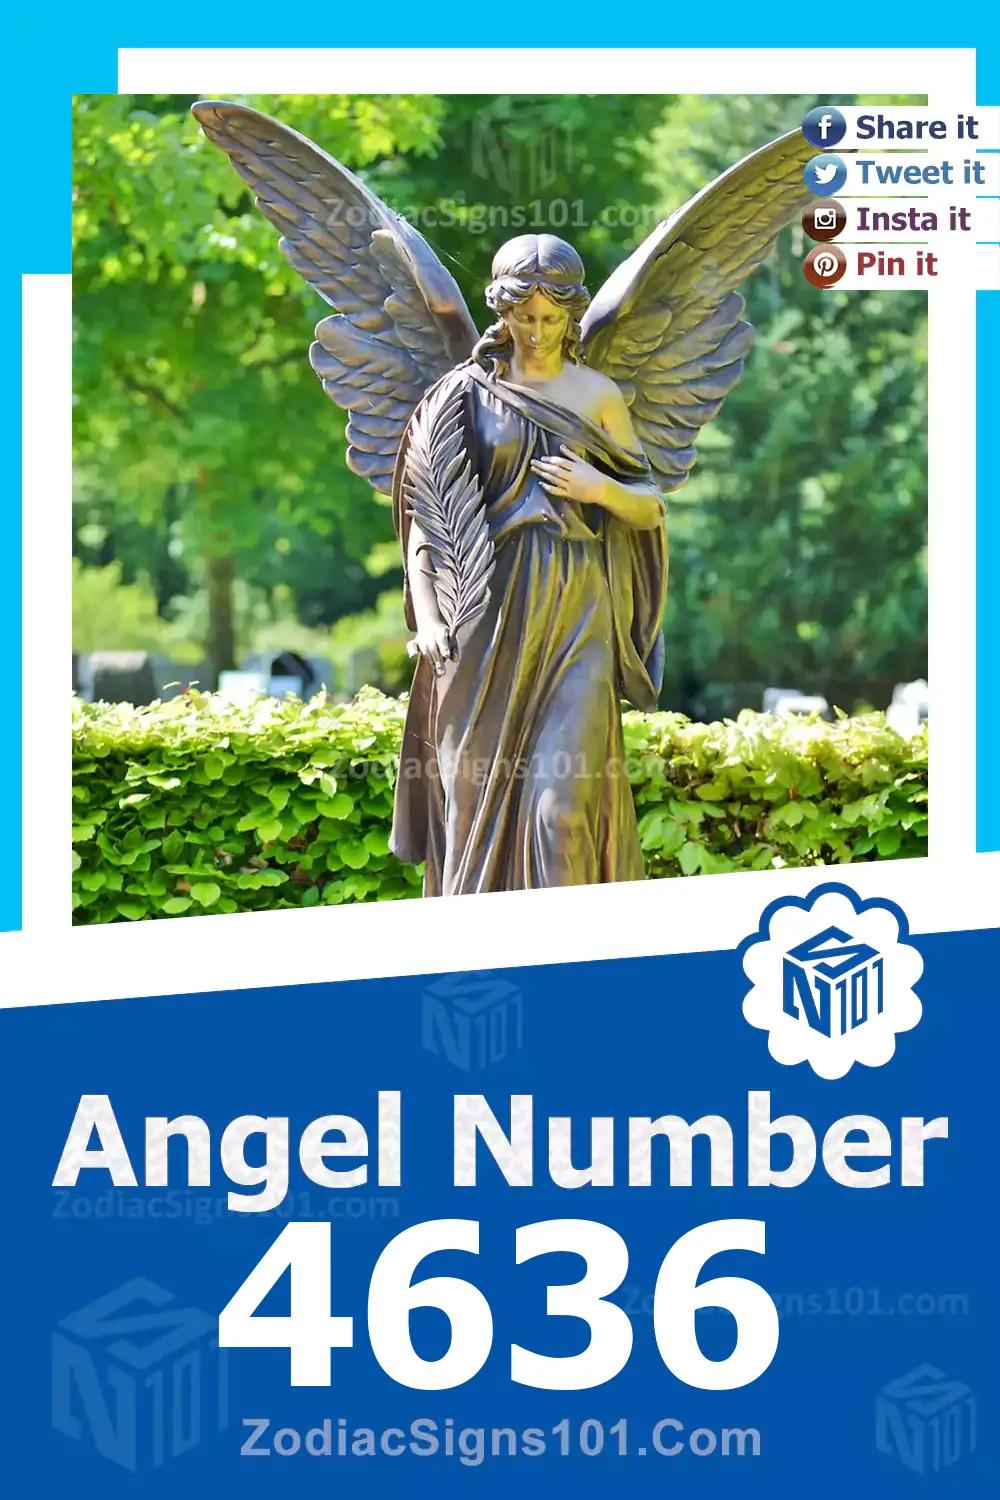 4636-Angel-Number-Meaning.jpg